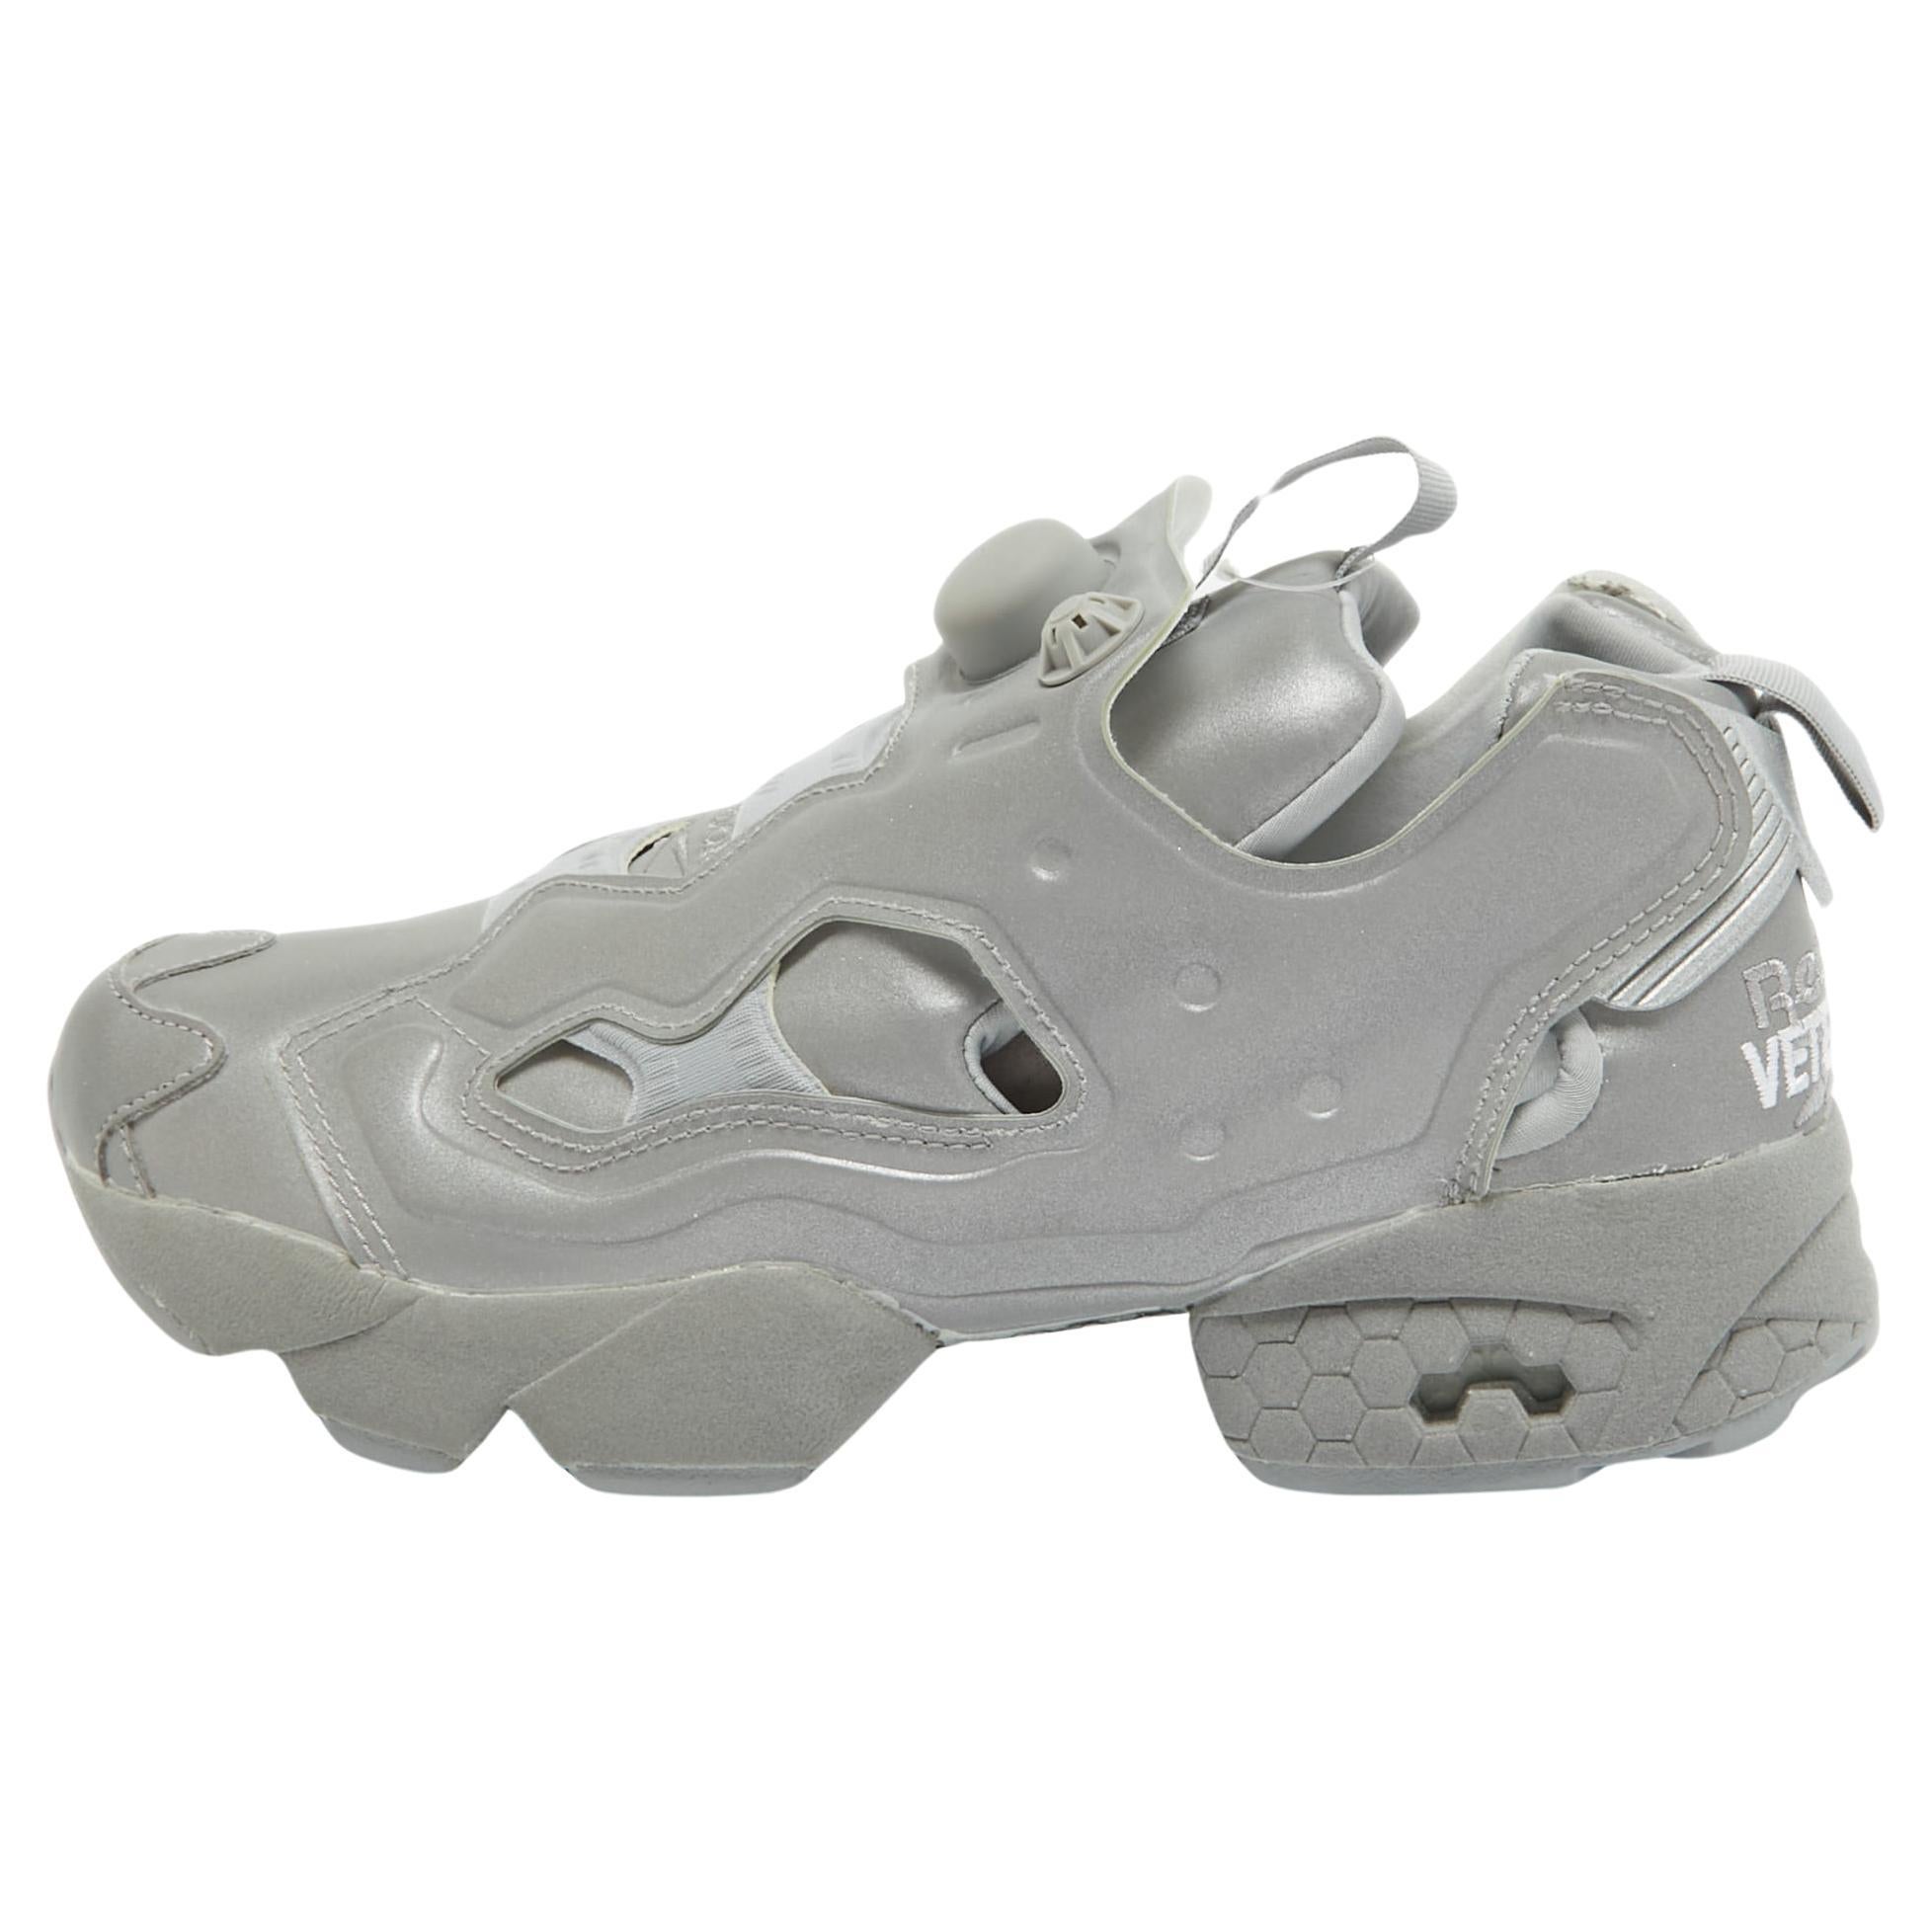 Vetements x Reebok Grey Reflective Fabric Instapump Fury Sneakers Size 38.5 For Sale